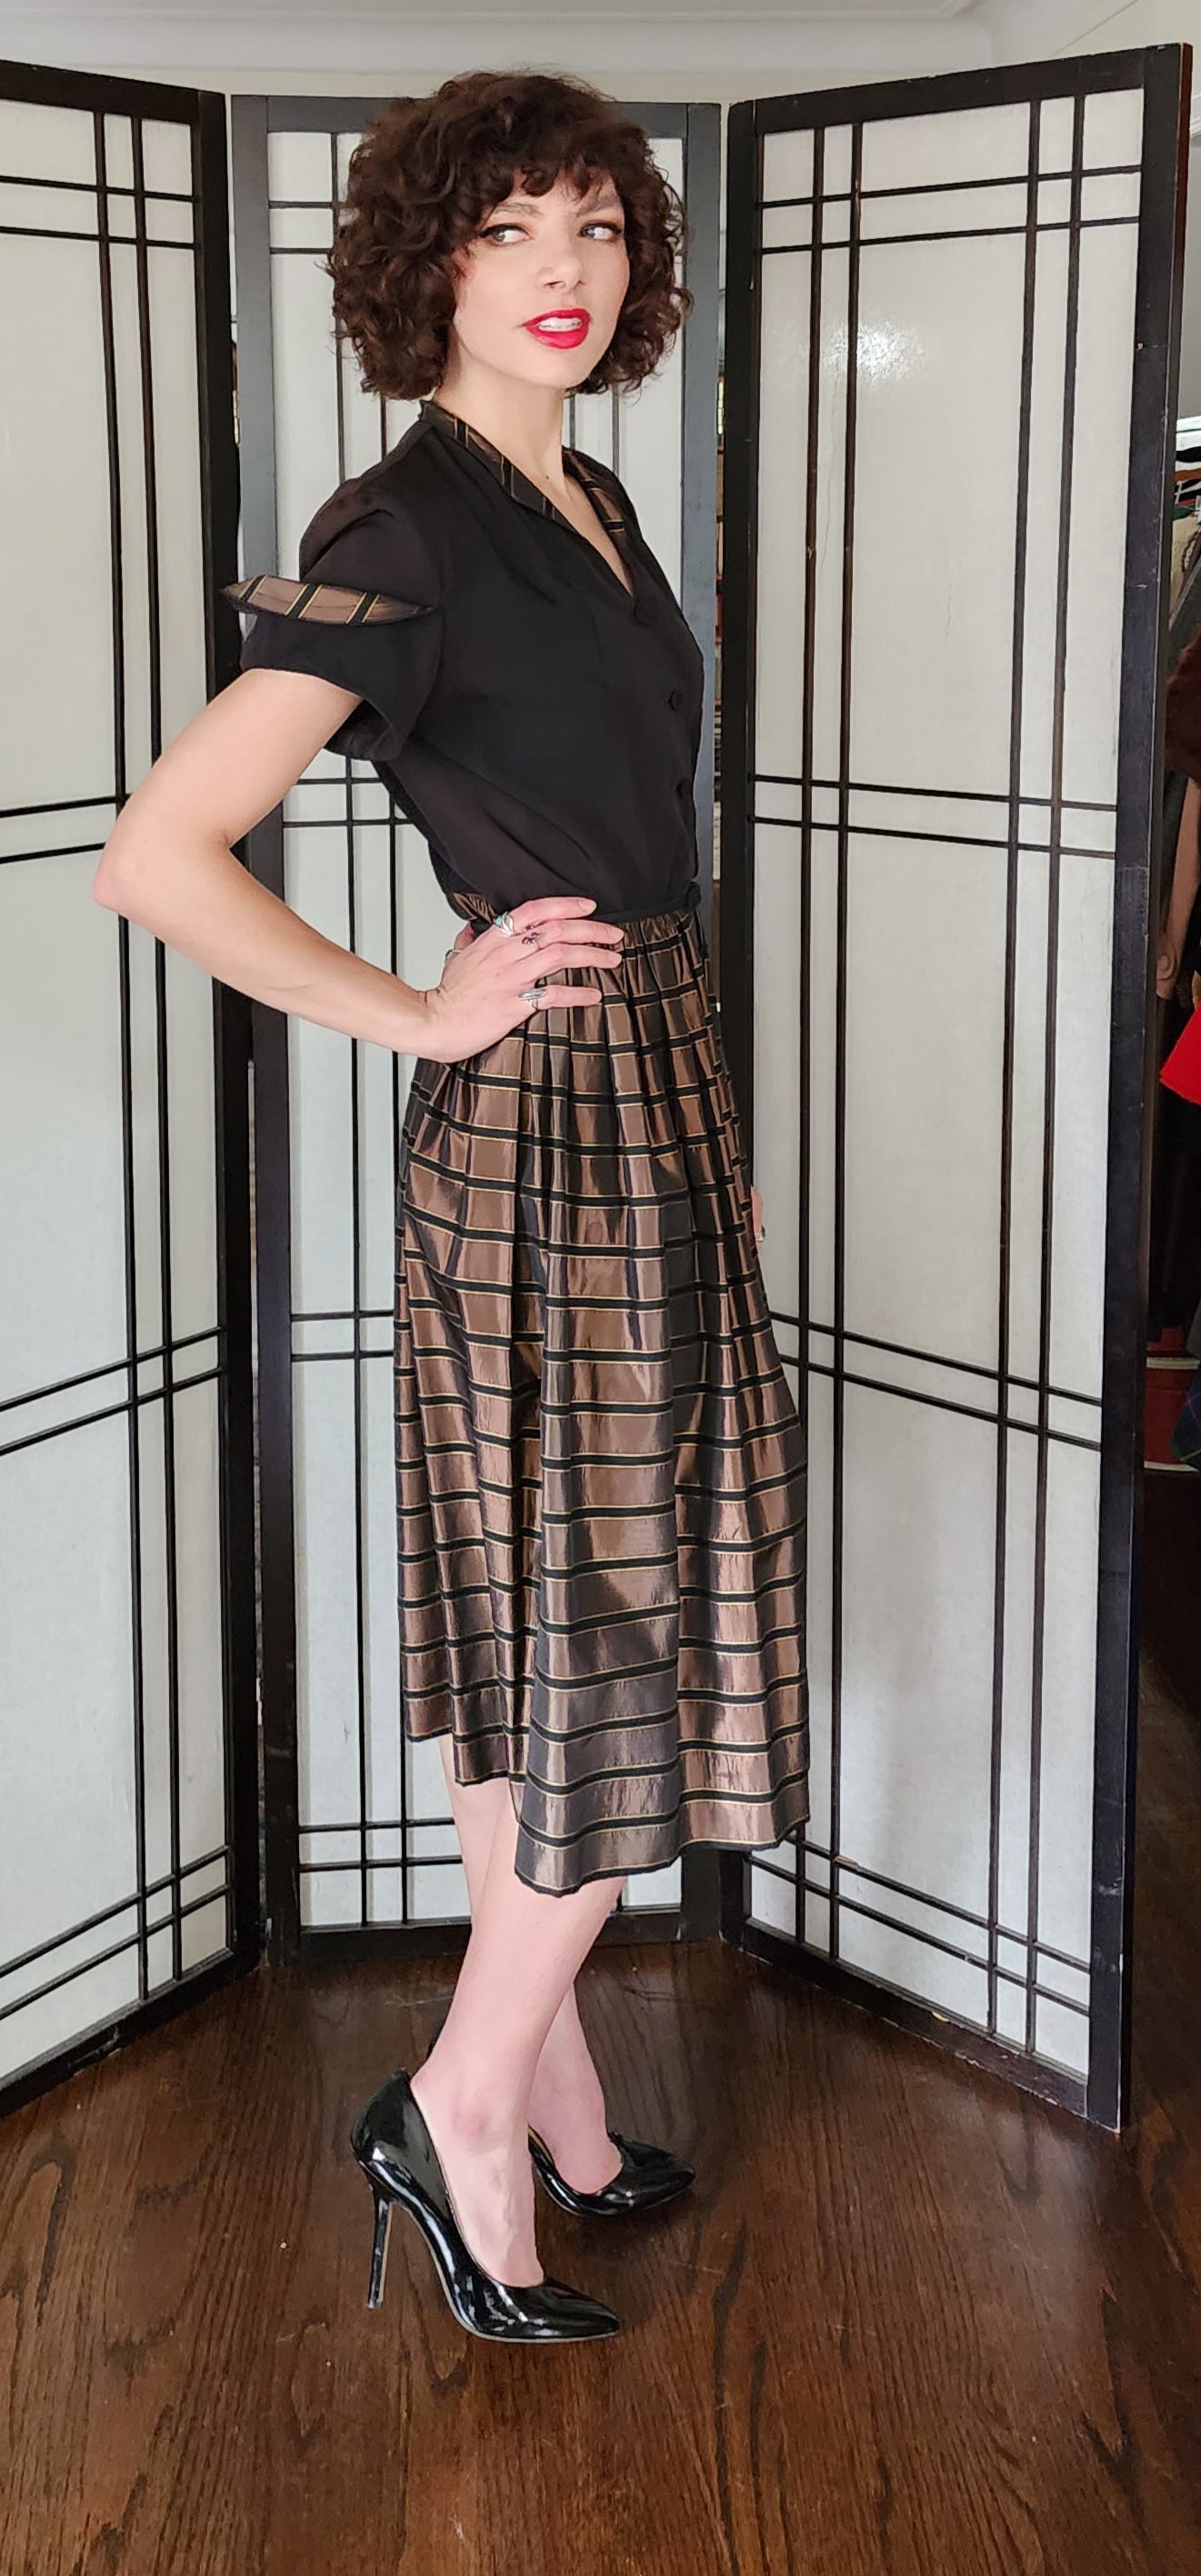 50s Party Dress Copper & Black, Striped Skirt, Shirtwaist Laura Lee